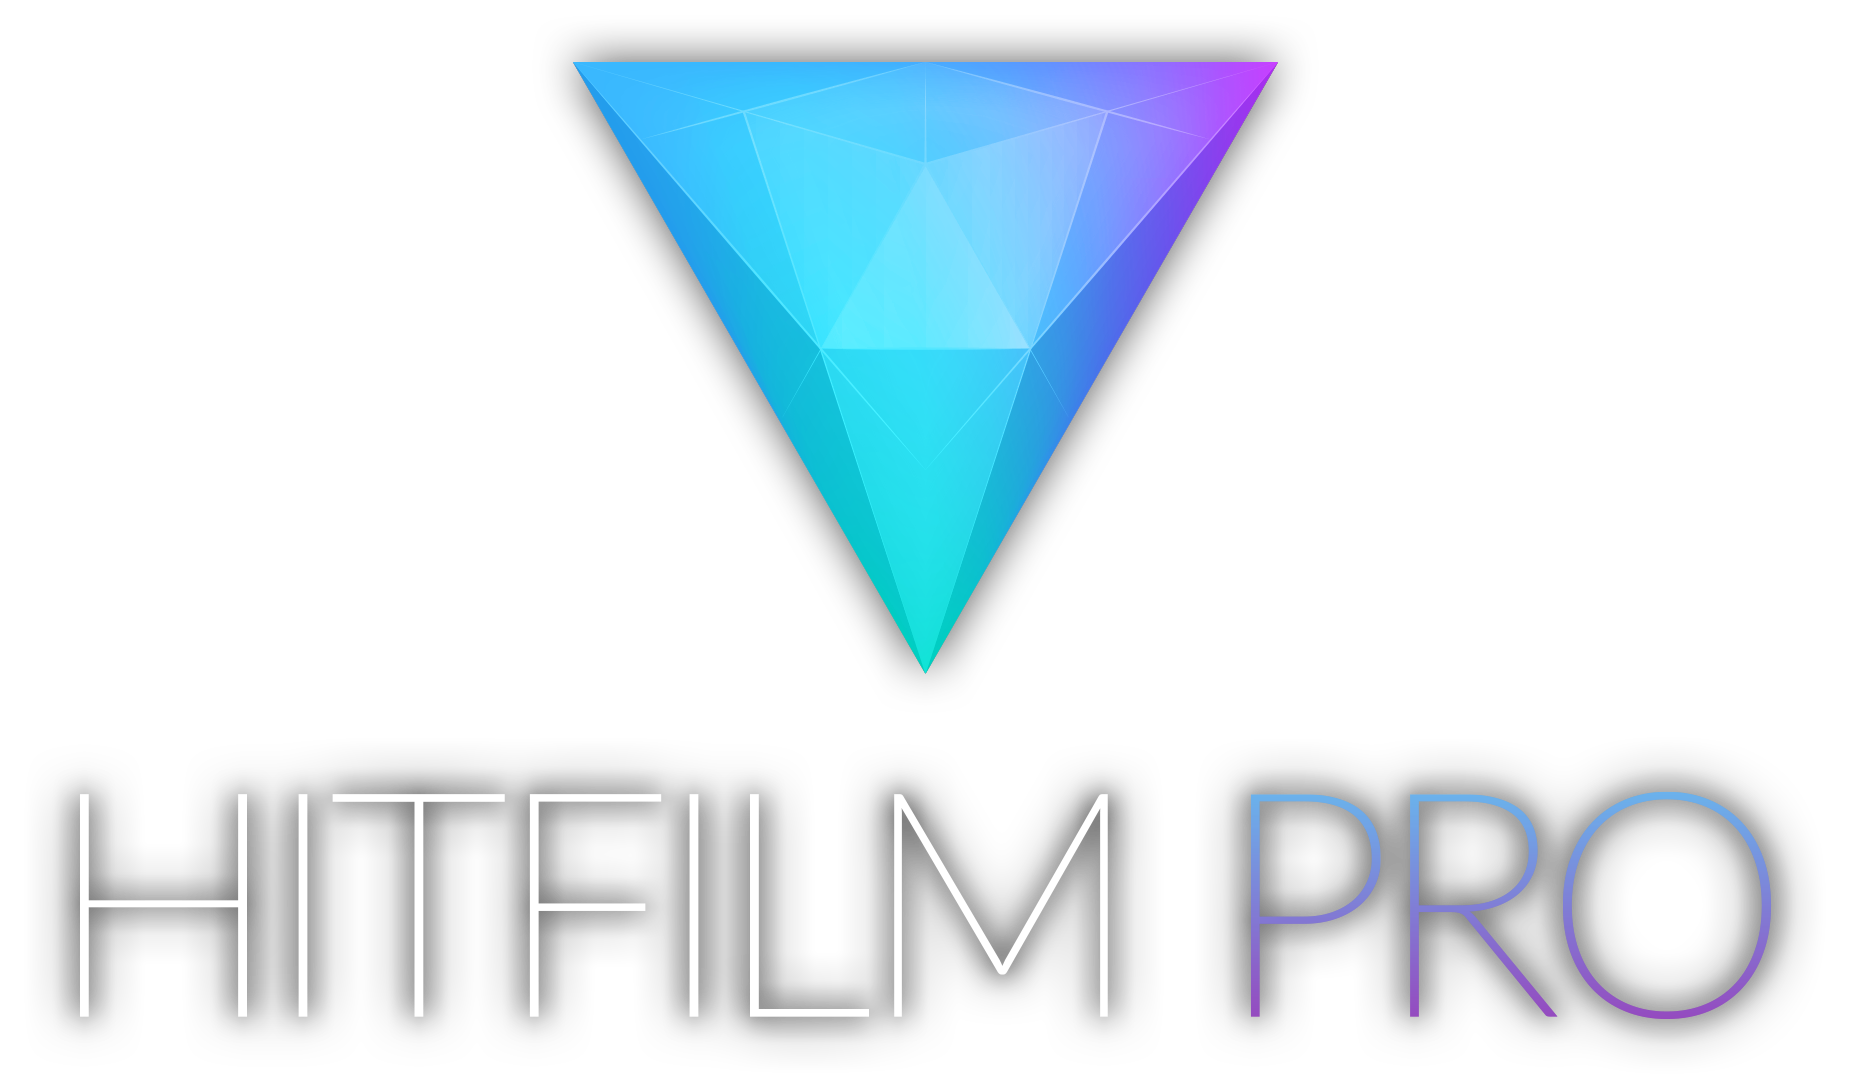 HitFilm Pro 11.0 Free Download